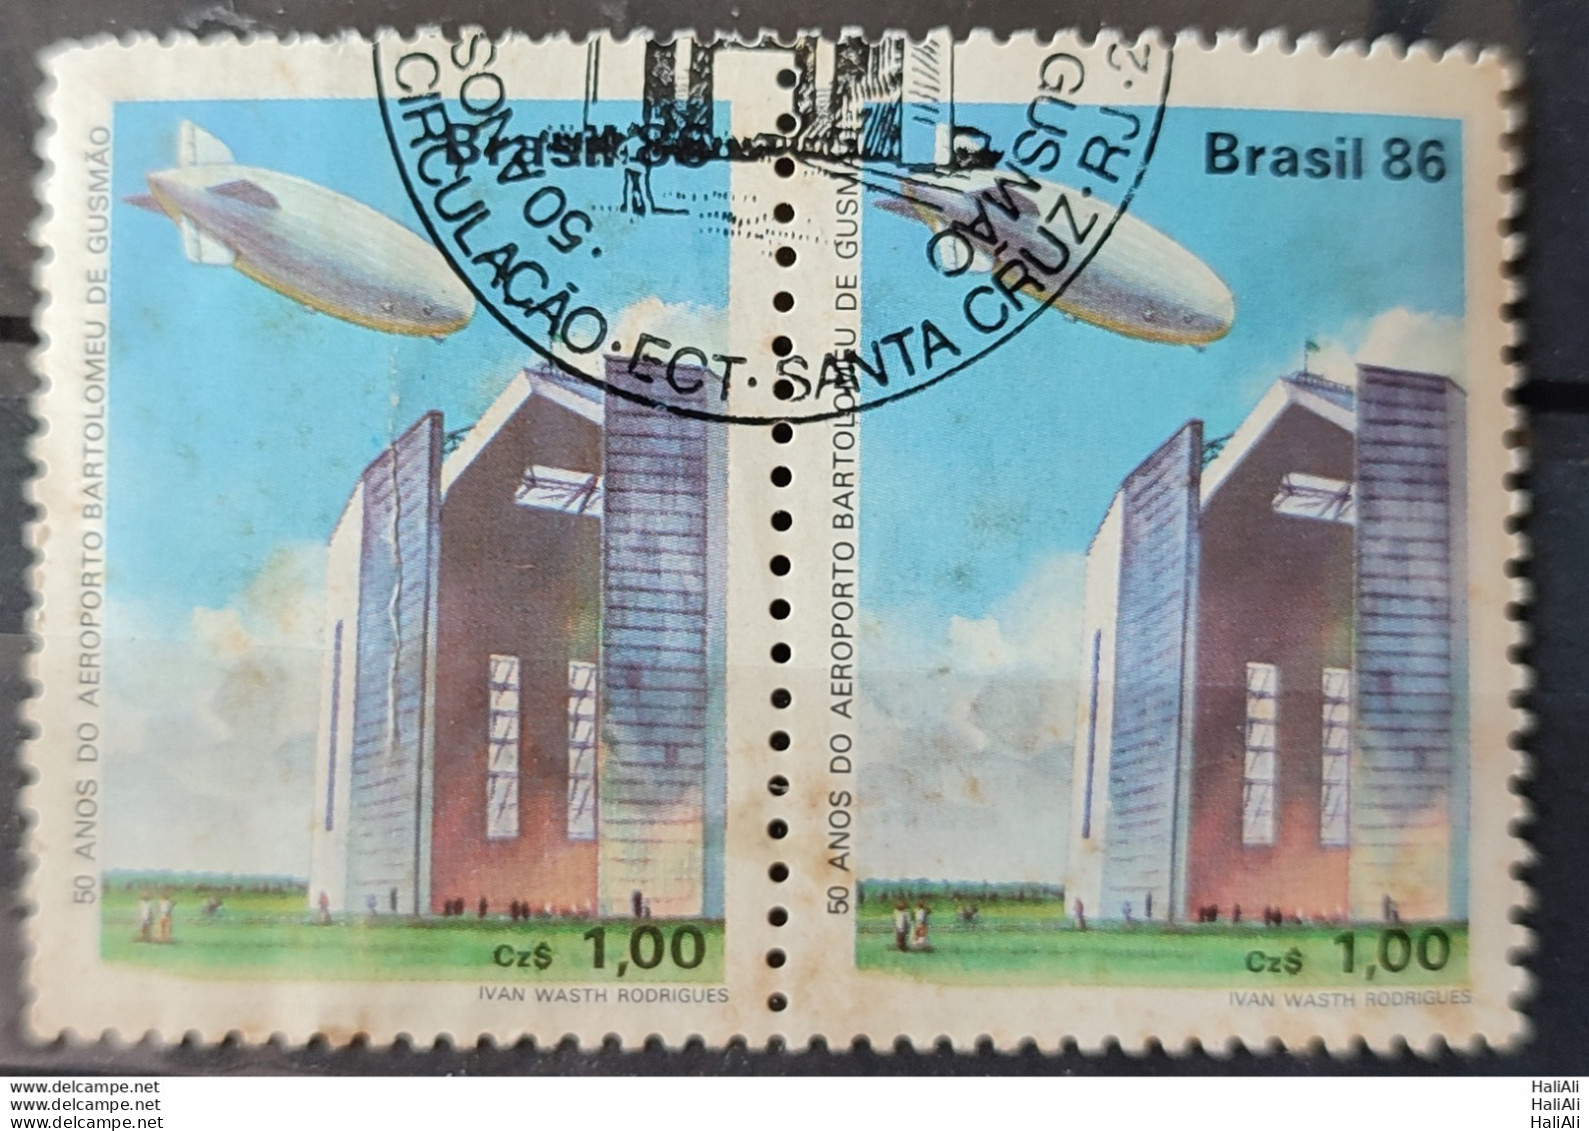 C 1541 Brazil Stamp 50 Years Airport Bartolomeu De Gusmao Balloon Hangar 1986 Dupla Circulated 2 - Used Stamps